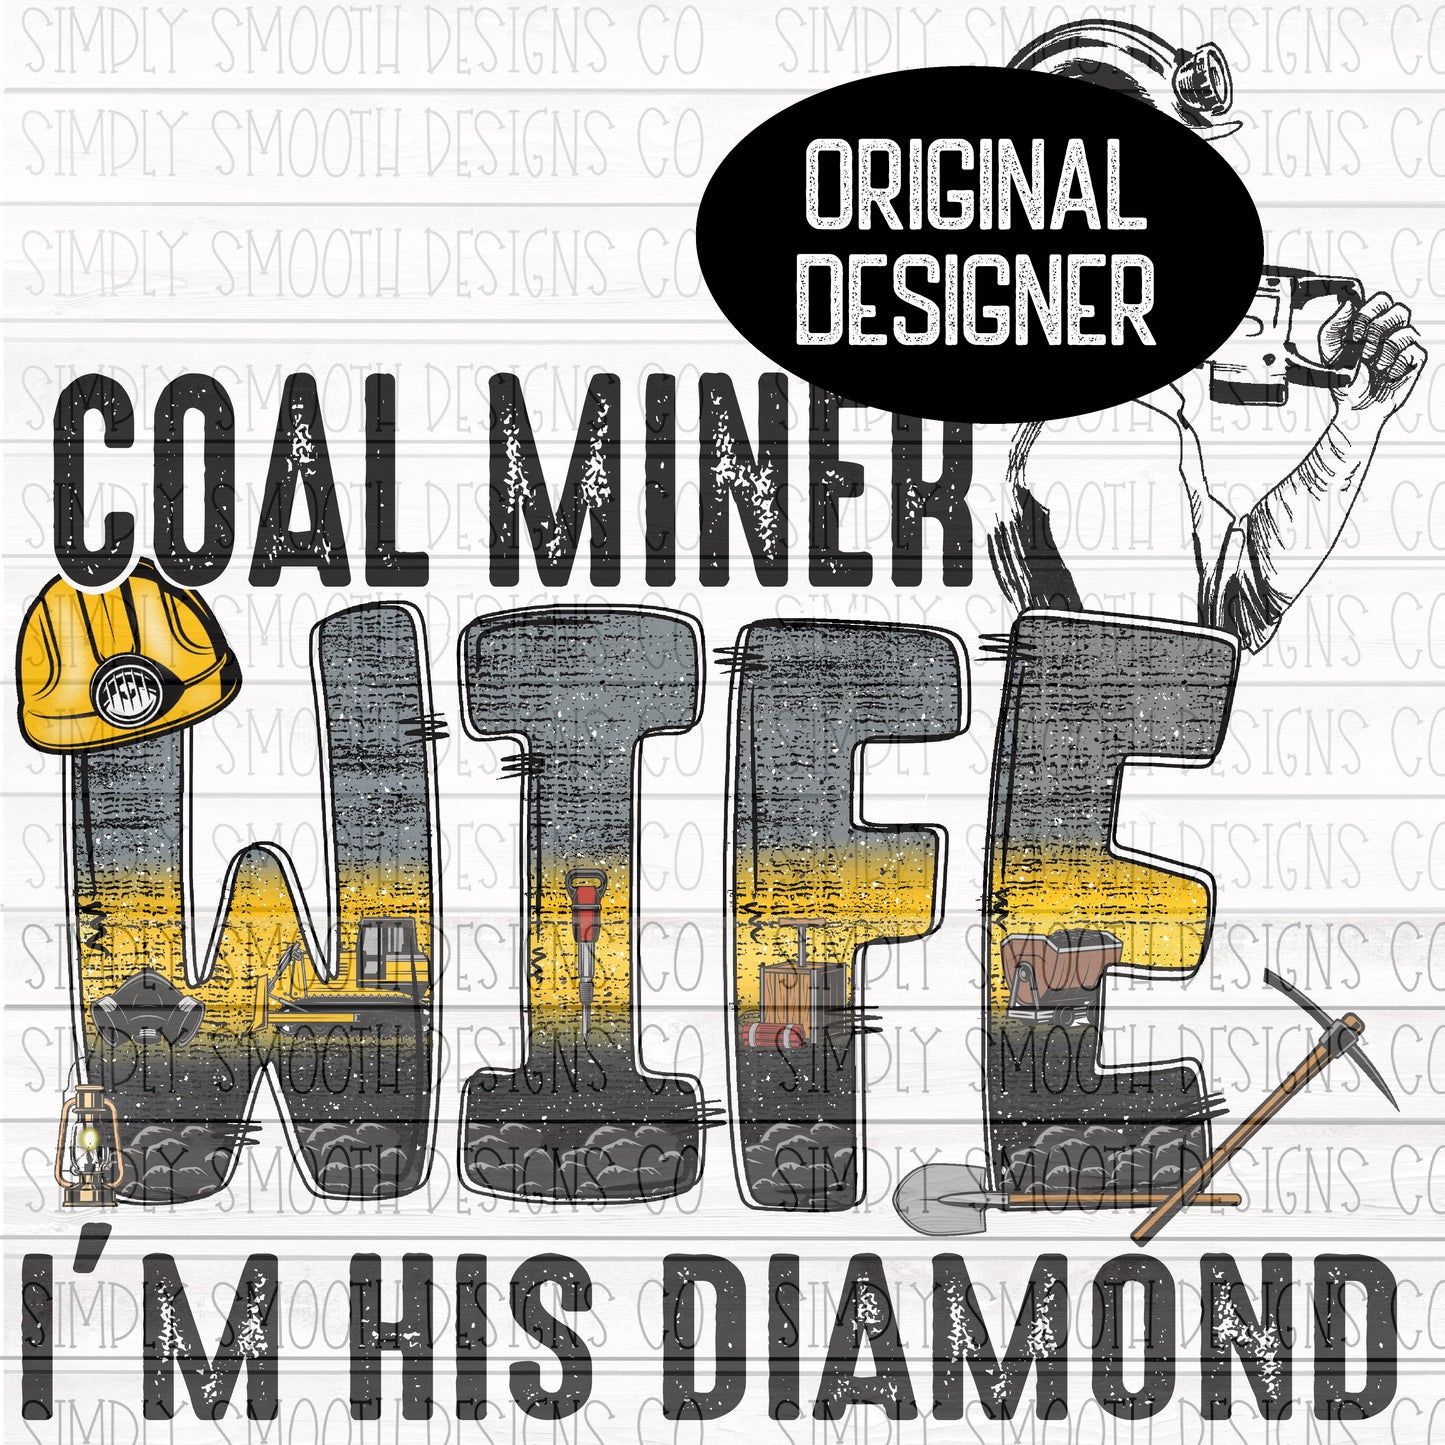 Coal Miner Wife